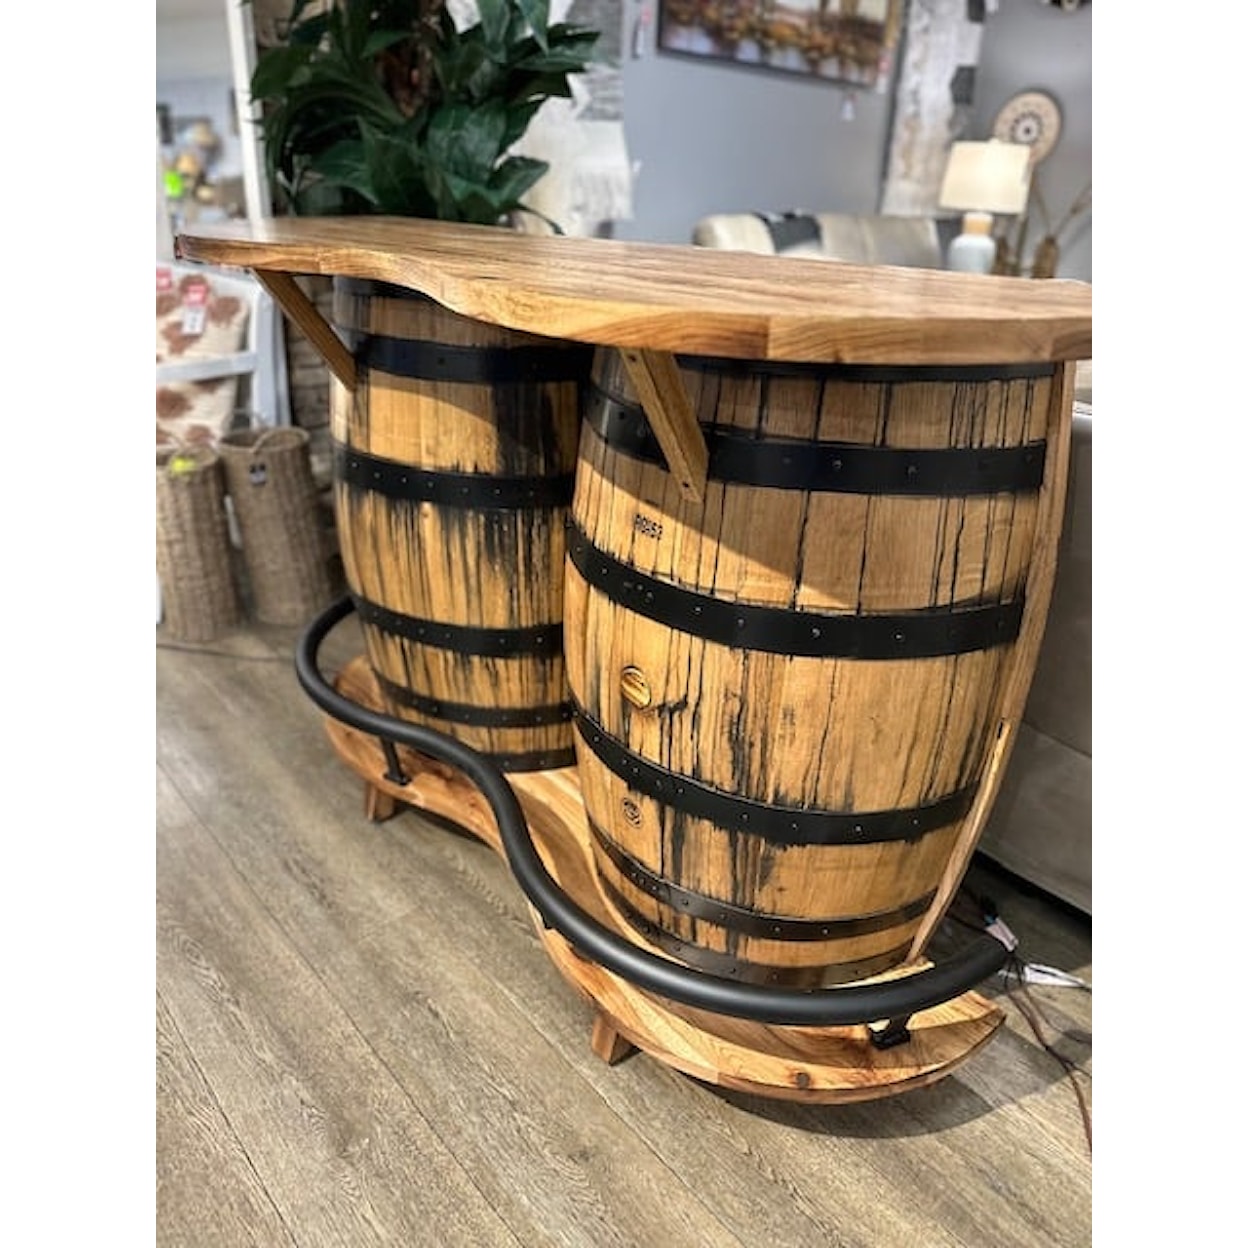 Rustic Barrel Design Dining Room Bar Table